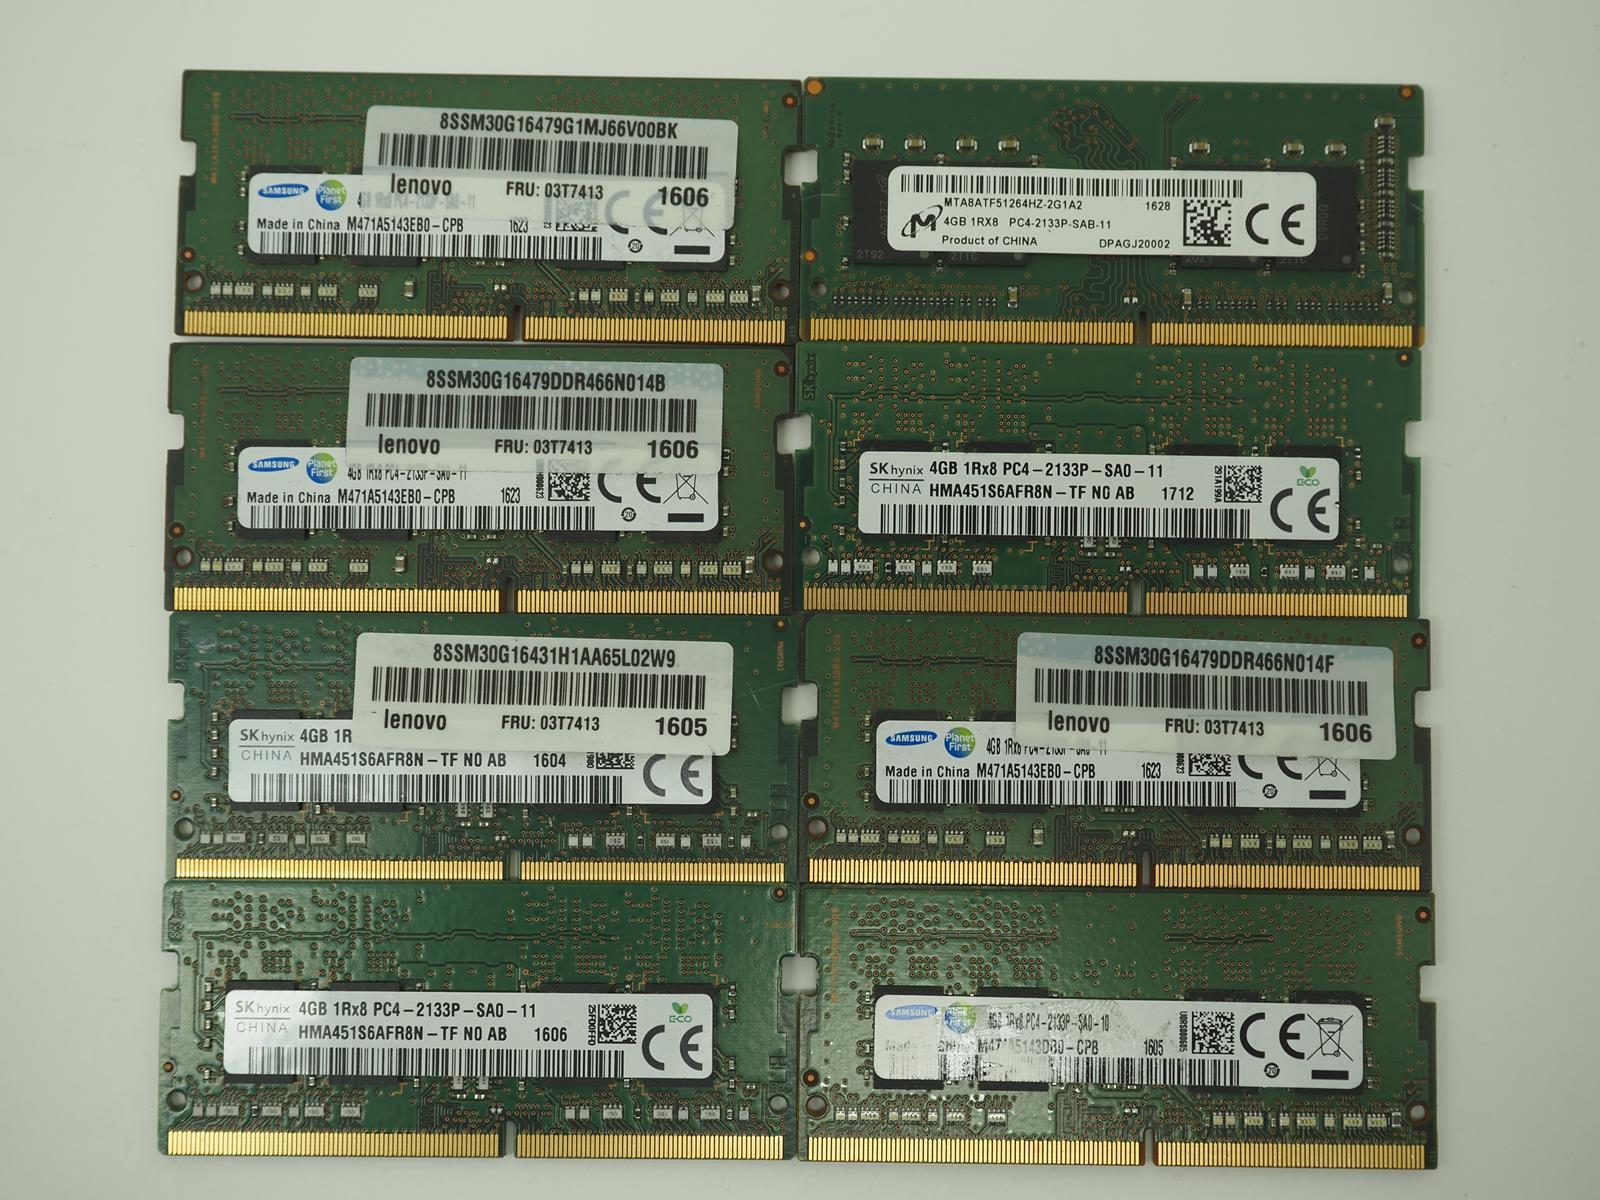 Lot of 8 4GB PC4-2133P Laptop Ram / Memory - MIXED BRAND (Hynix, Samsung, etc.)